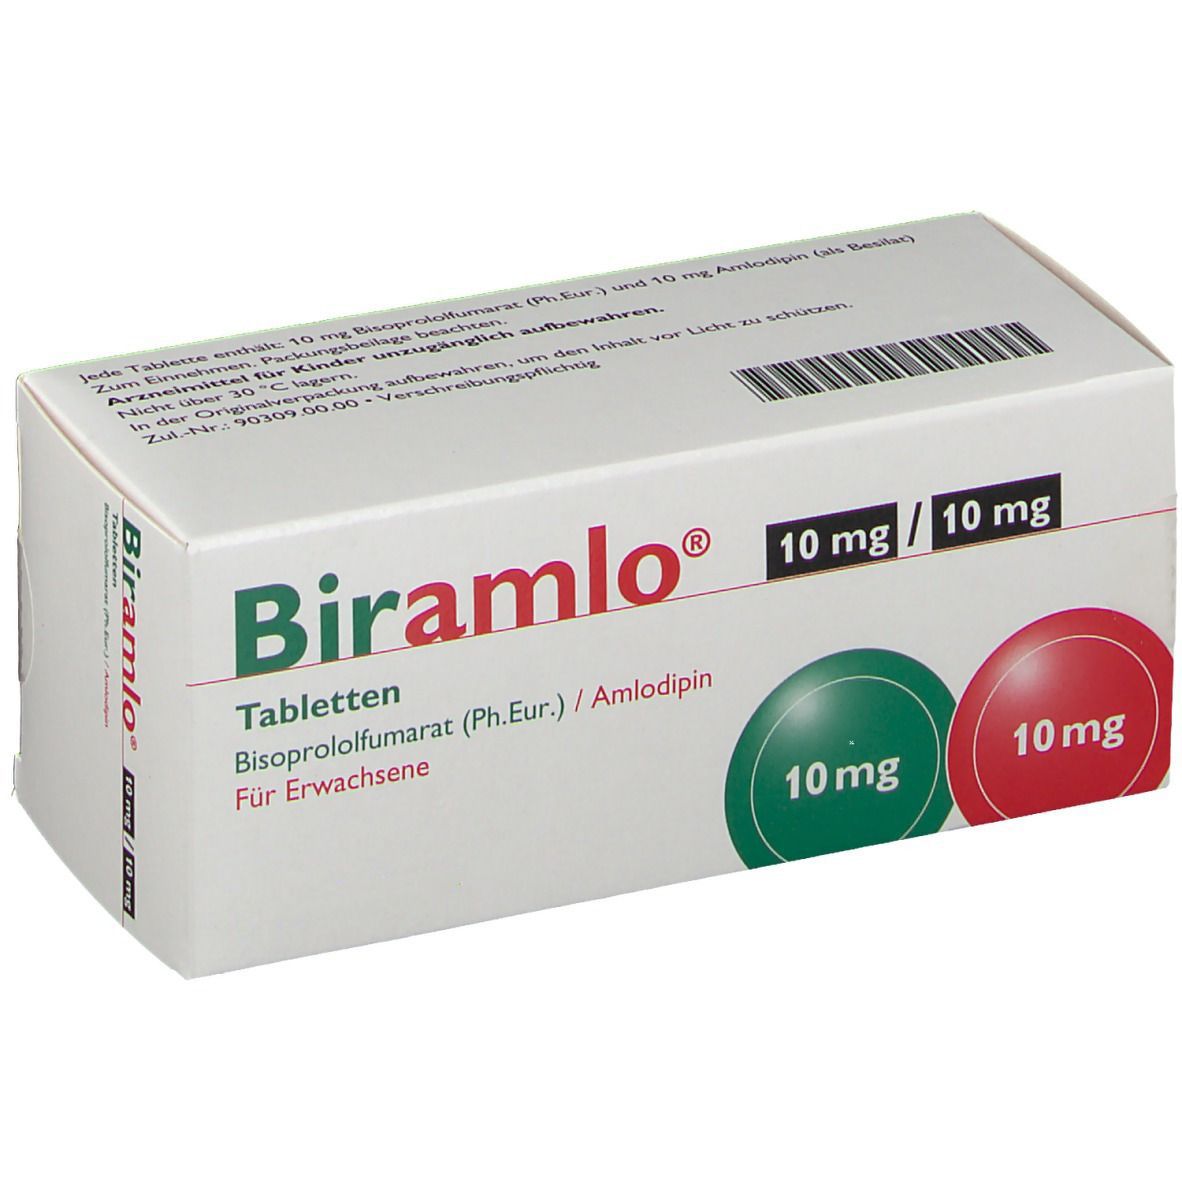 Biramlo® 10 mg/10 mg